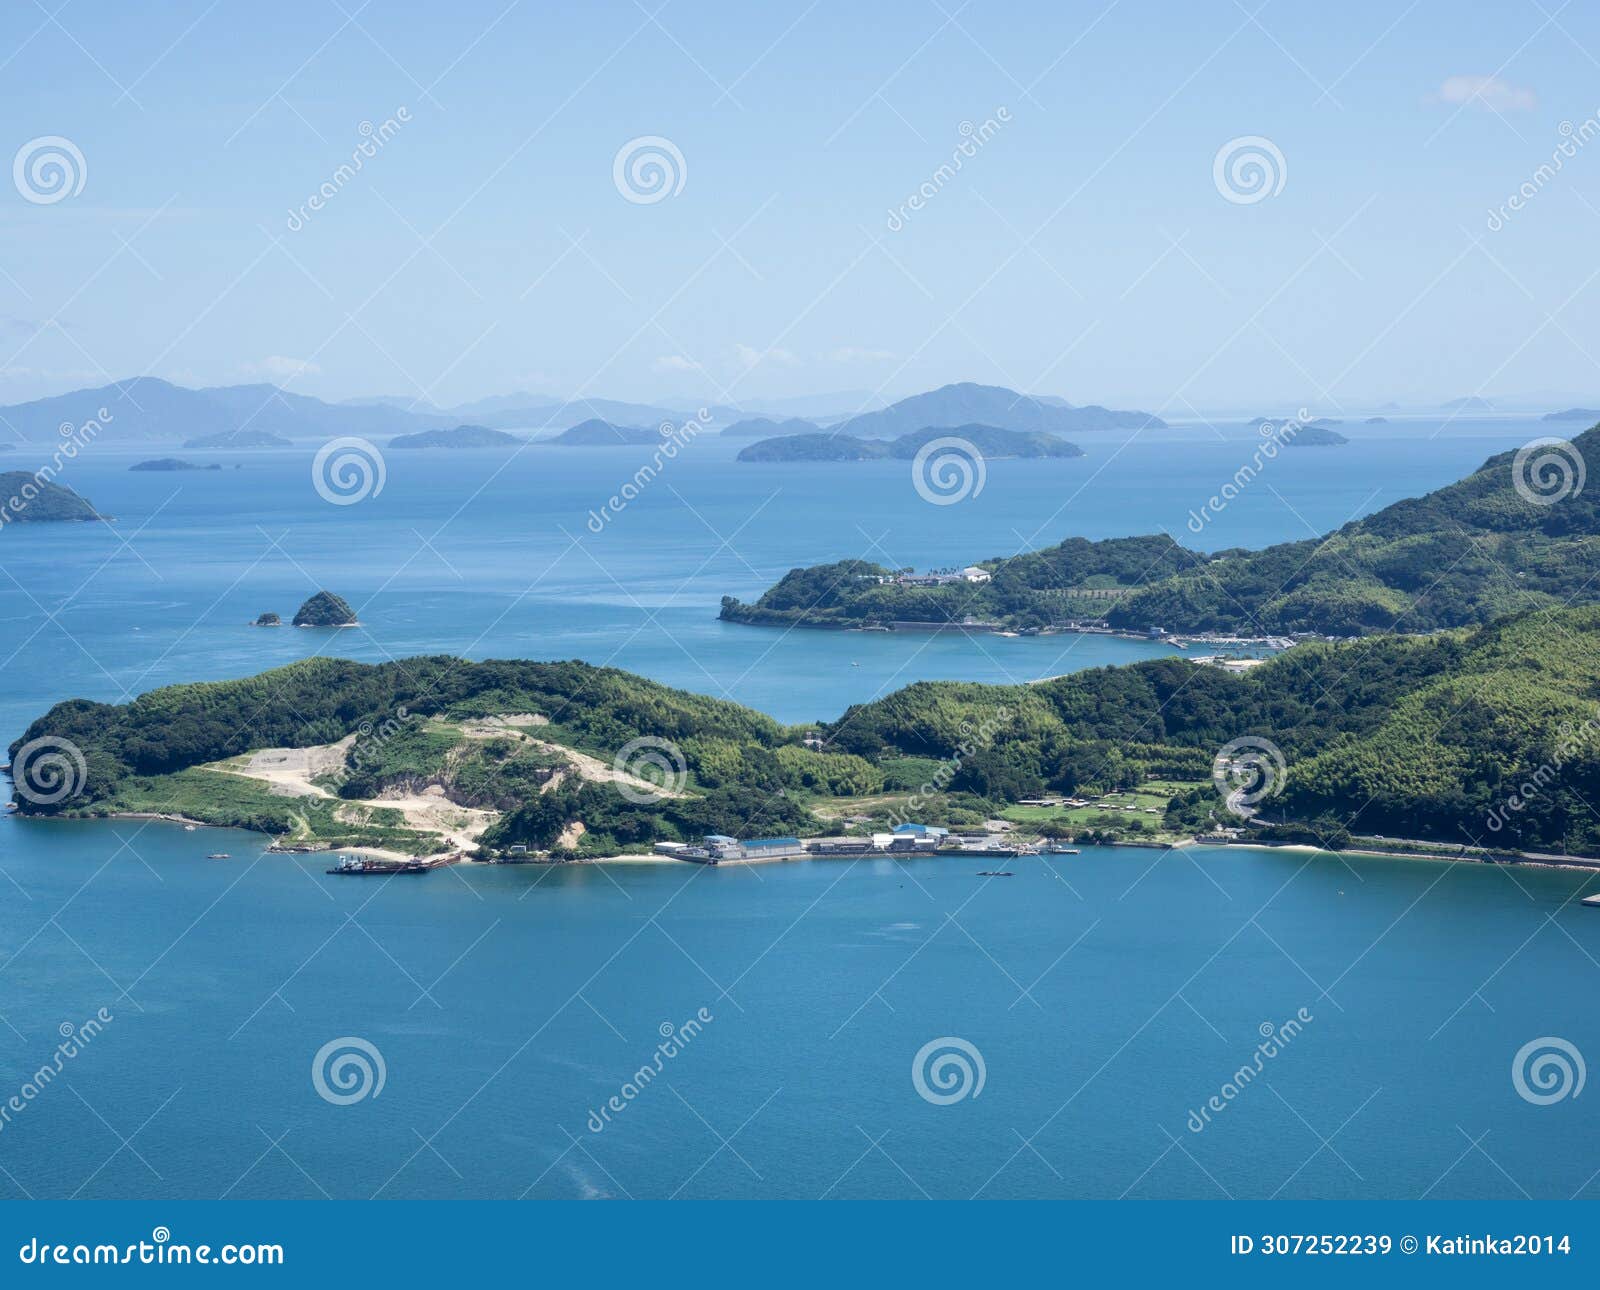 scenic view of suo oshima island and seto inland sea from iinoyama viewpoint